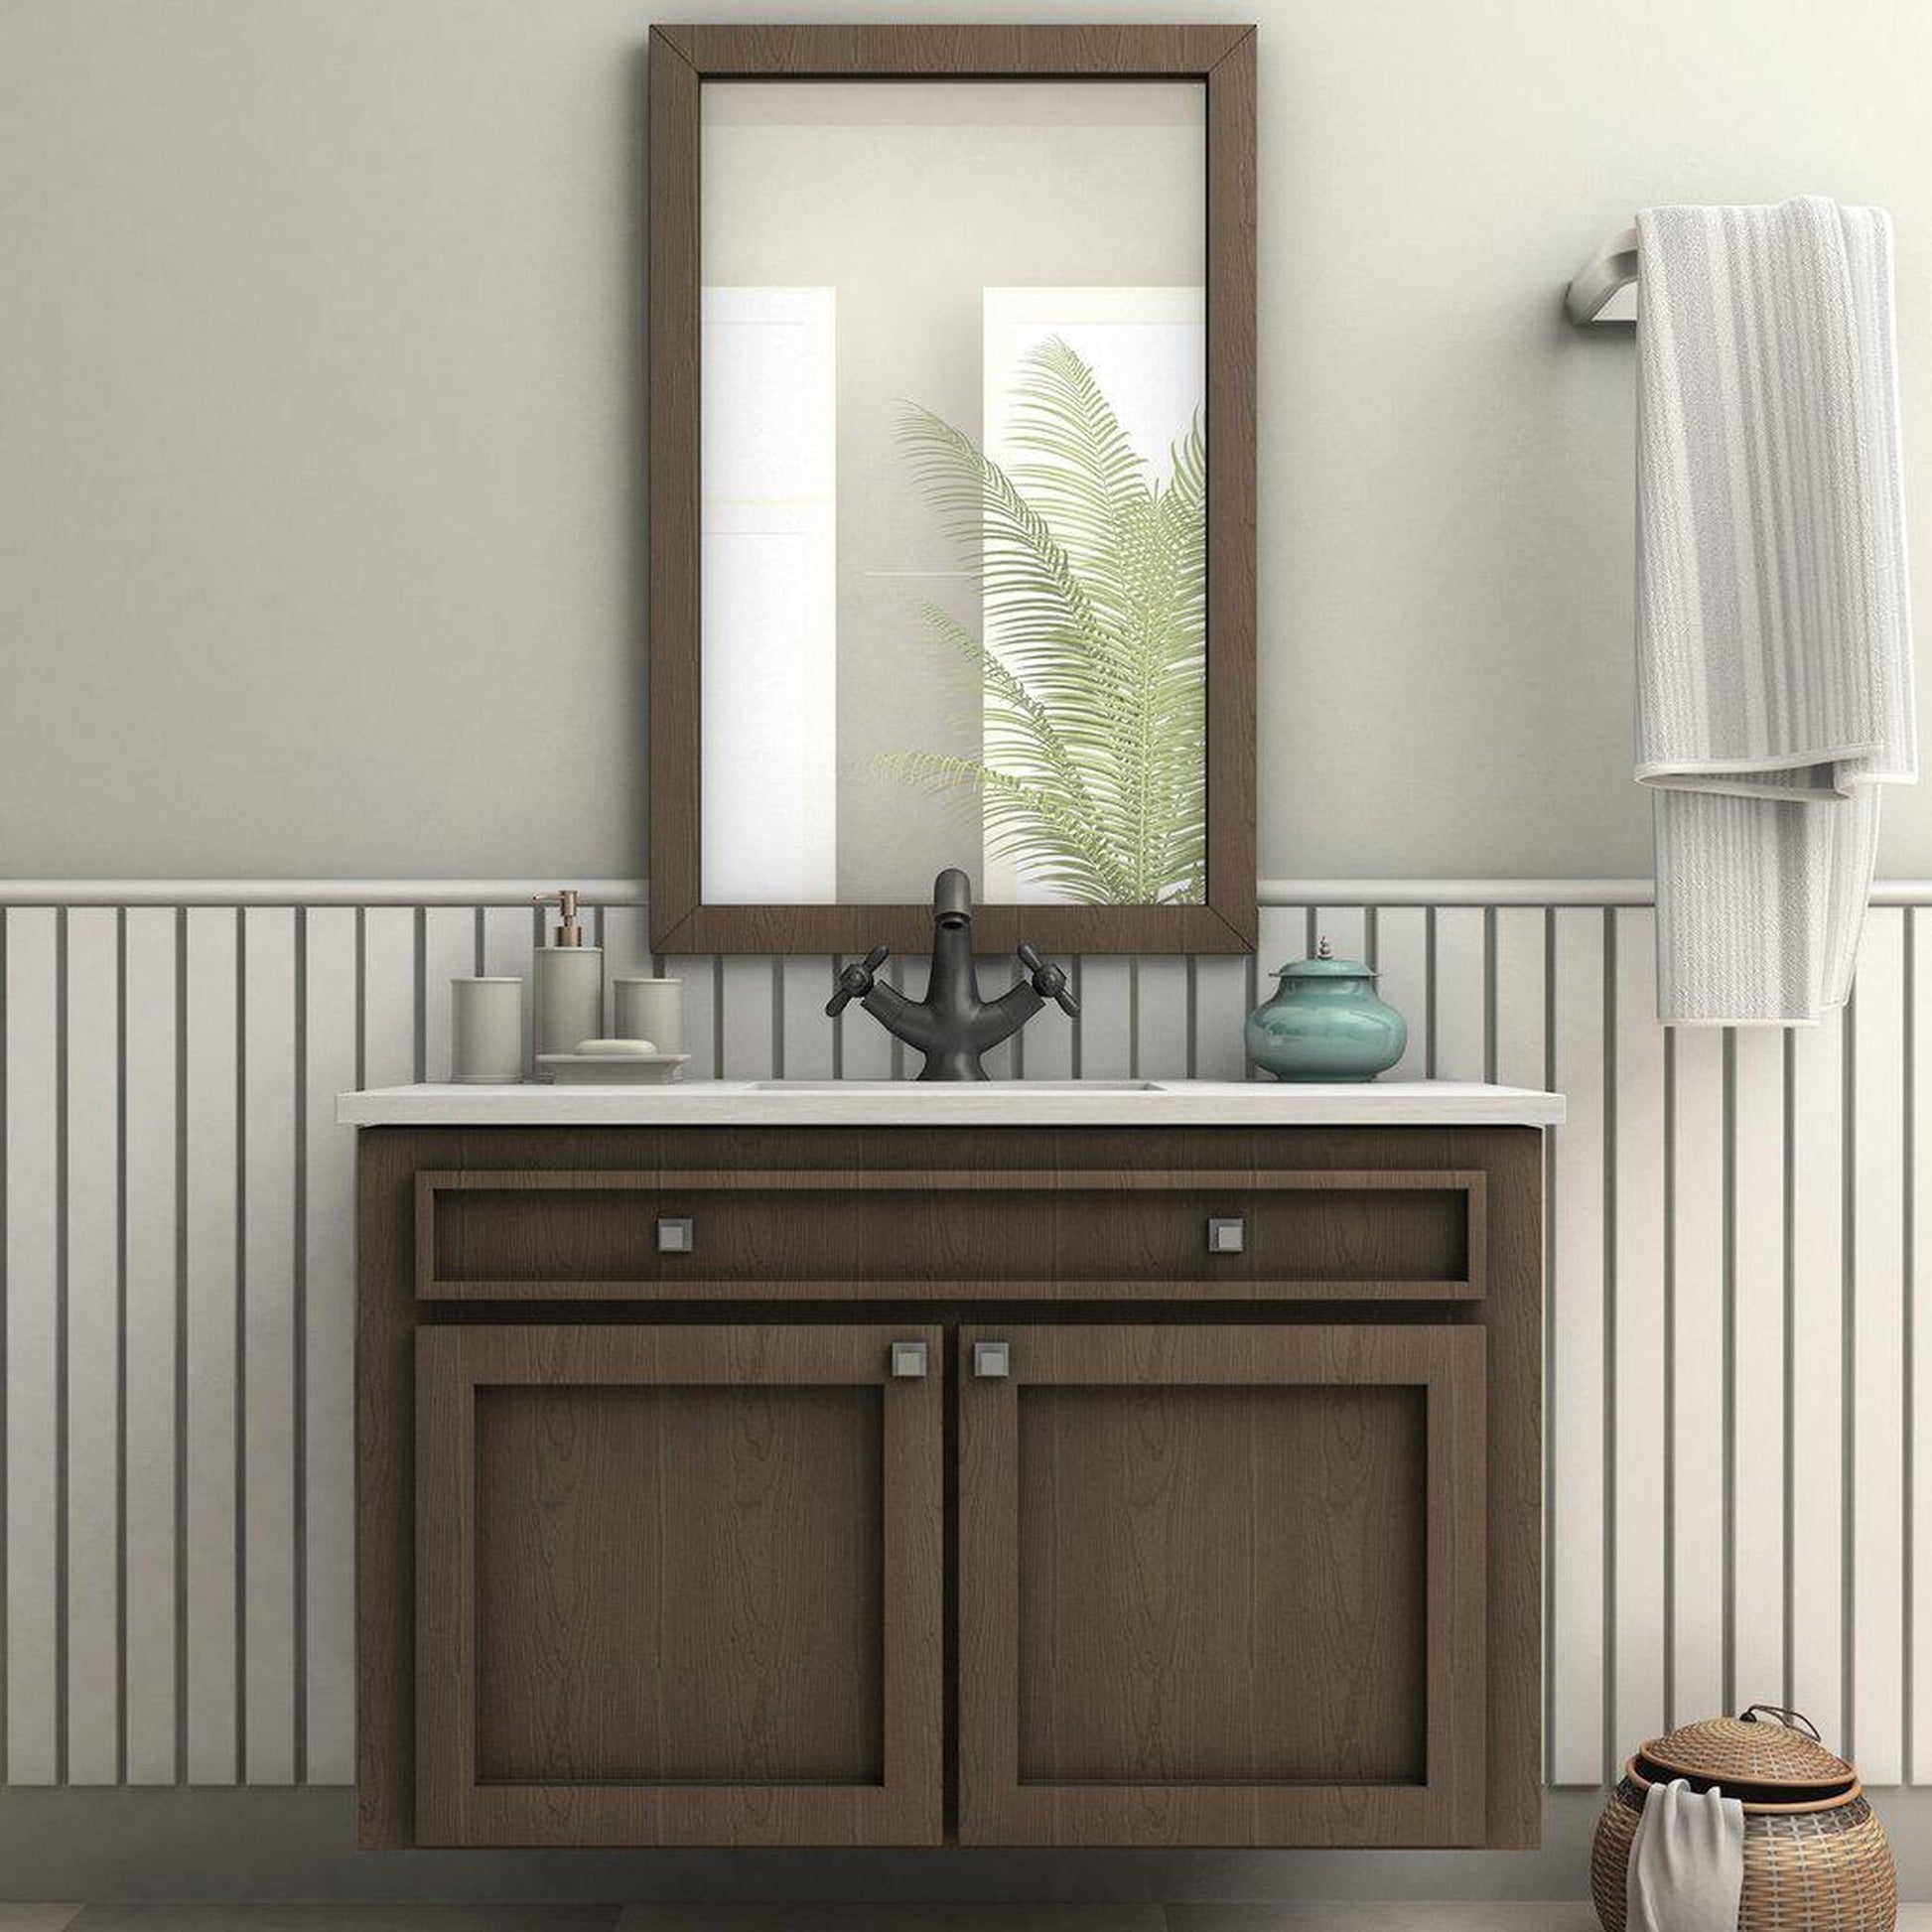 ZLINE Baldwin Centerset 1.5 GPM Oil-Rubbed Bronze Bathroom Sink Faucet With Drain